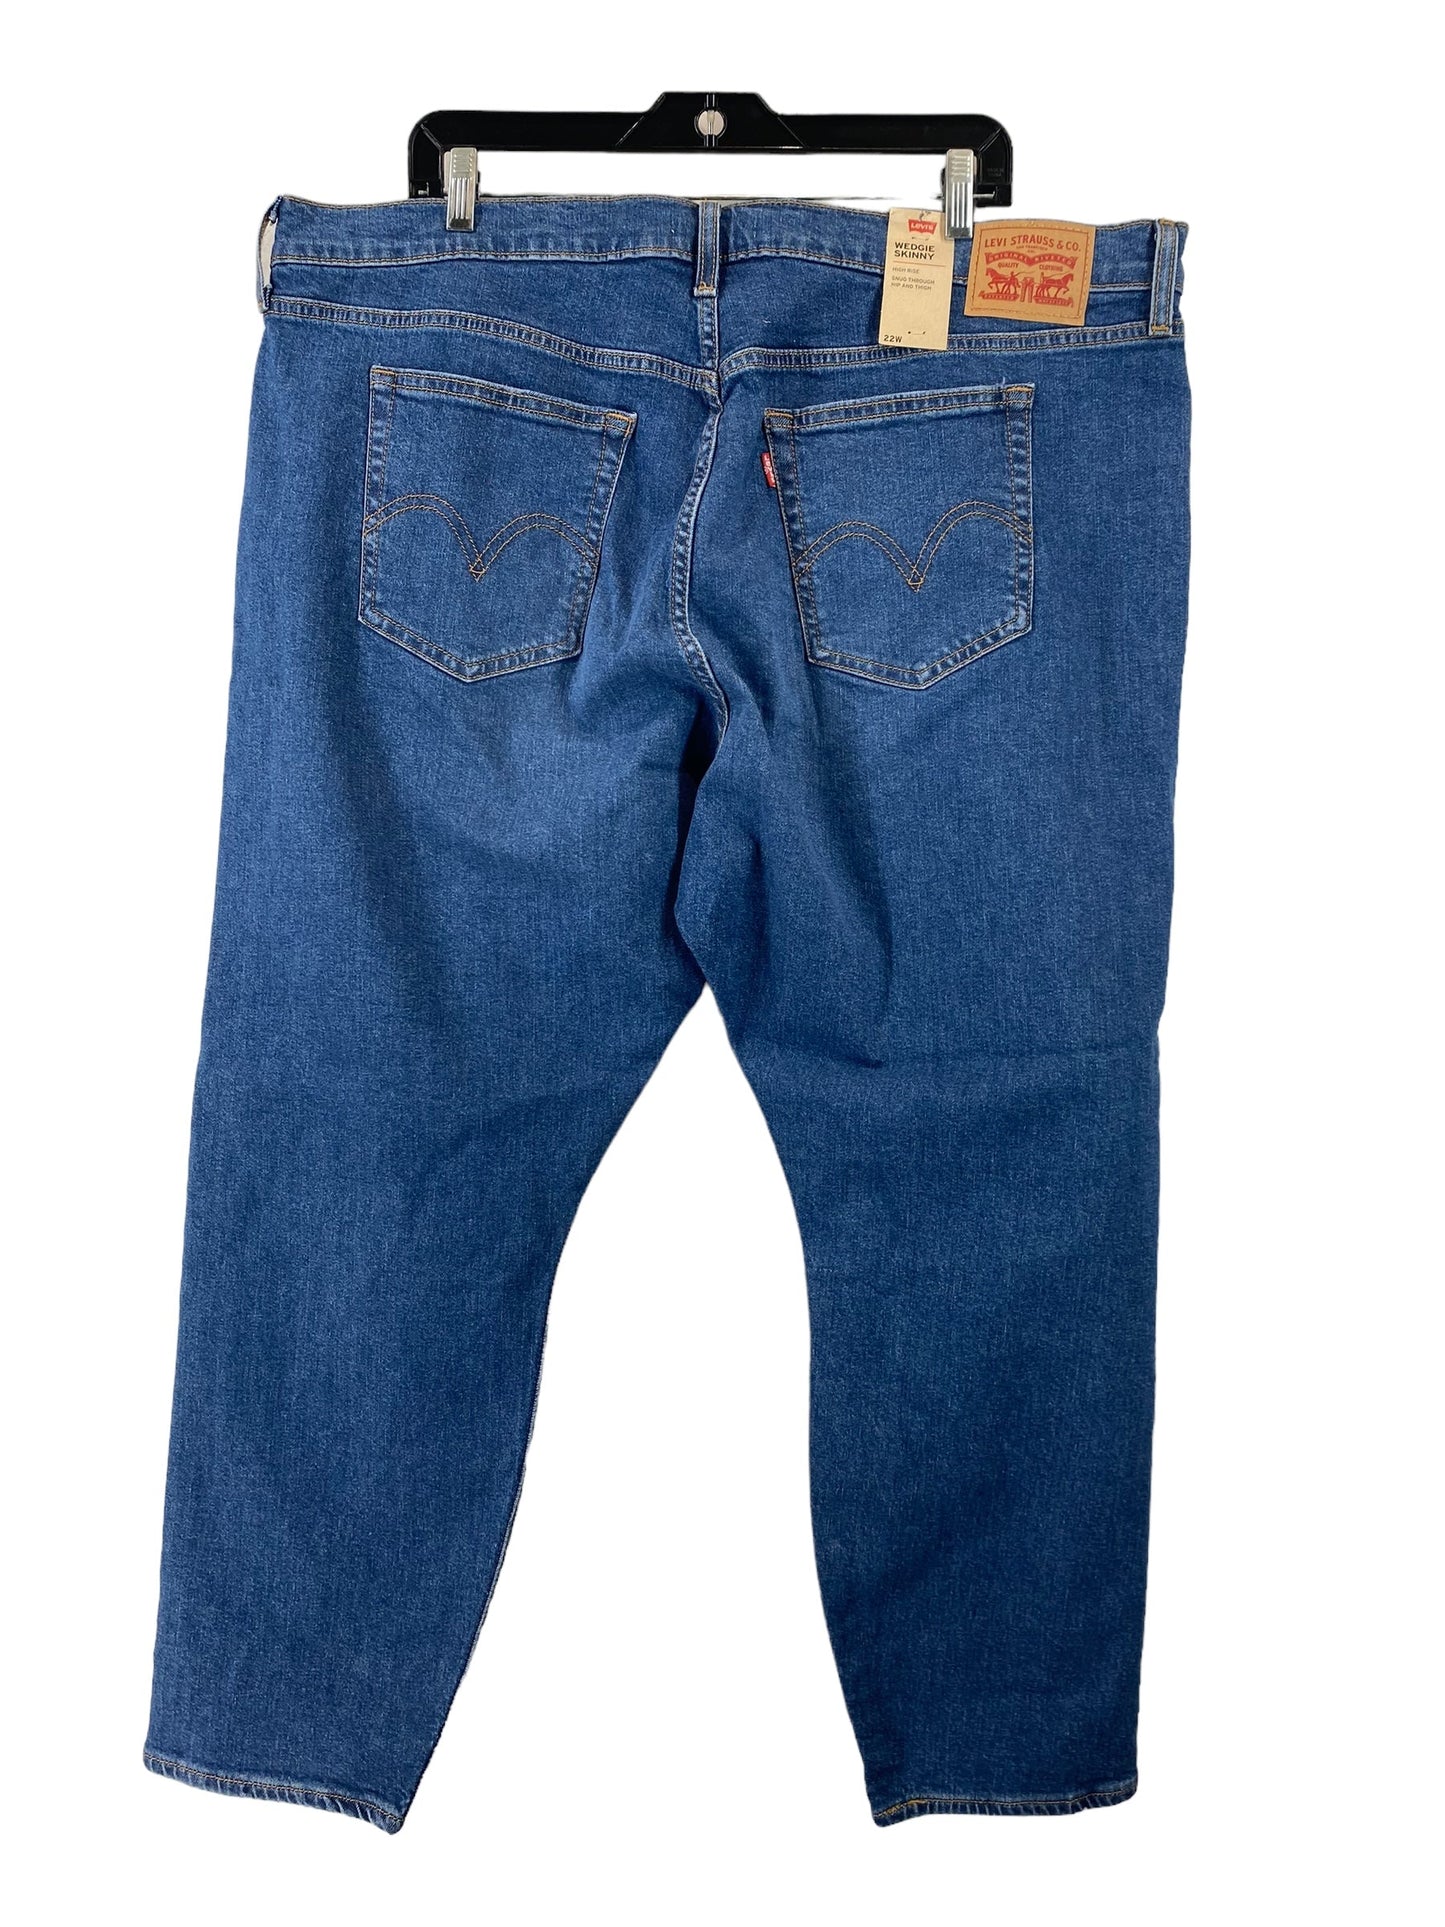 Jeans Skinny By Levis  Size: 22w